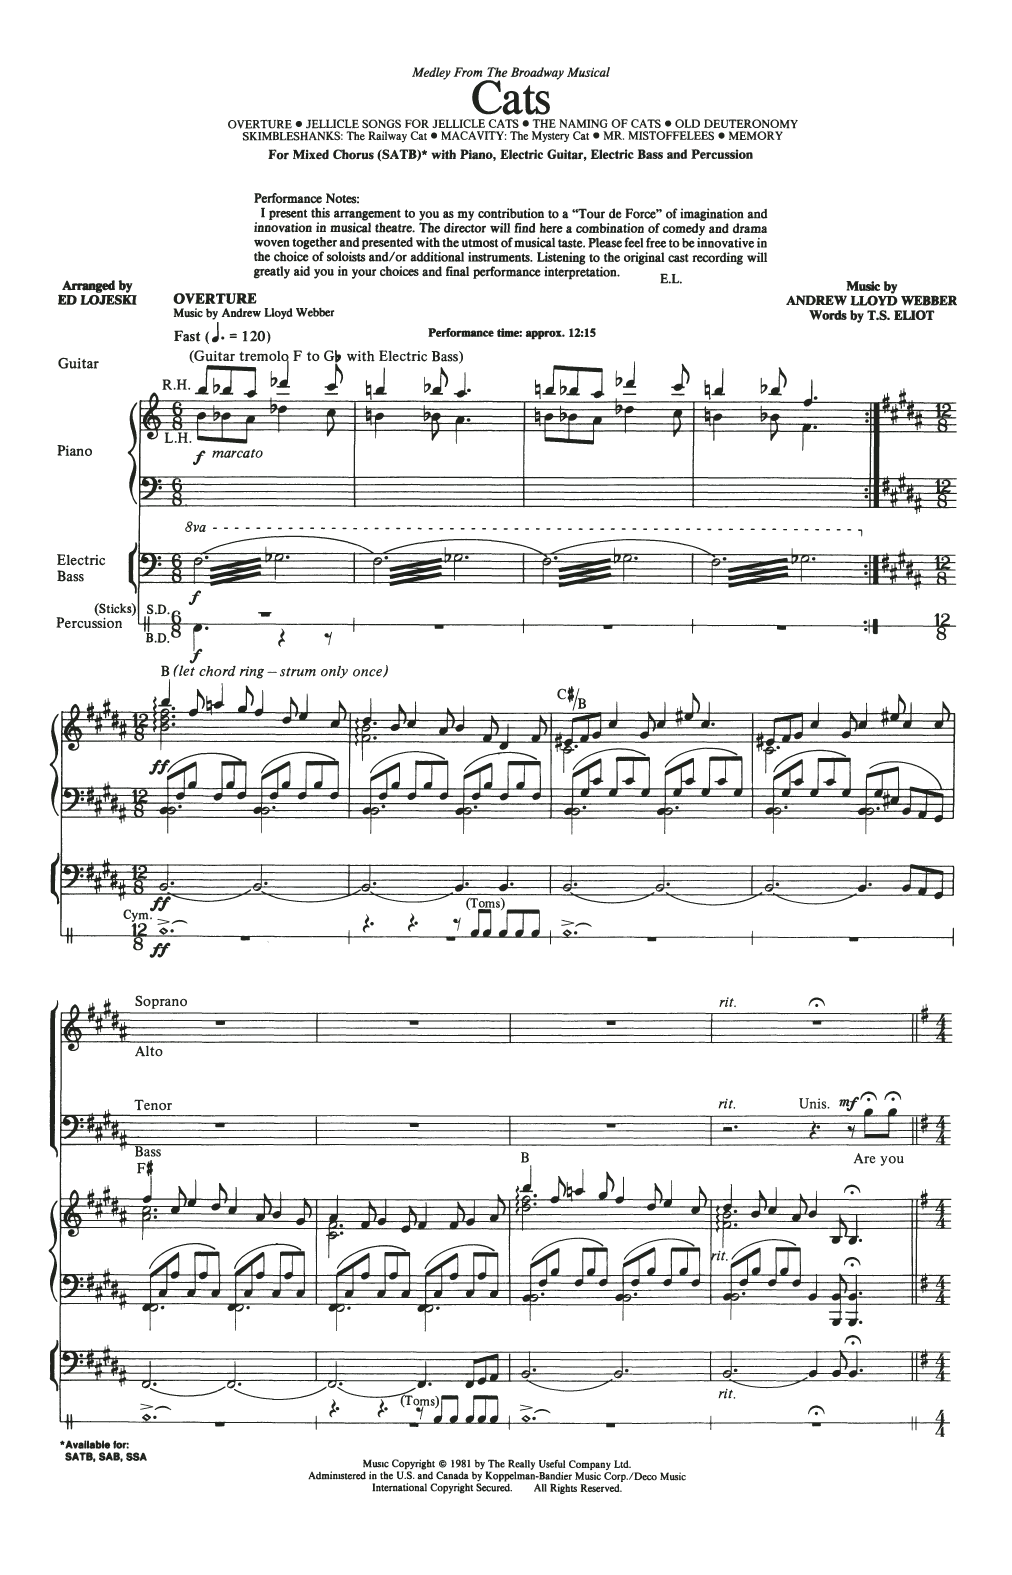 Download Andrew Lloyd Webber Cats (Medley) (arr. Ed Lojeski) Sheet Music